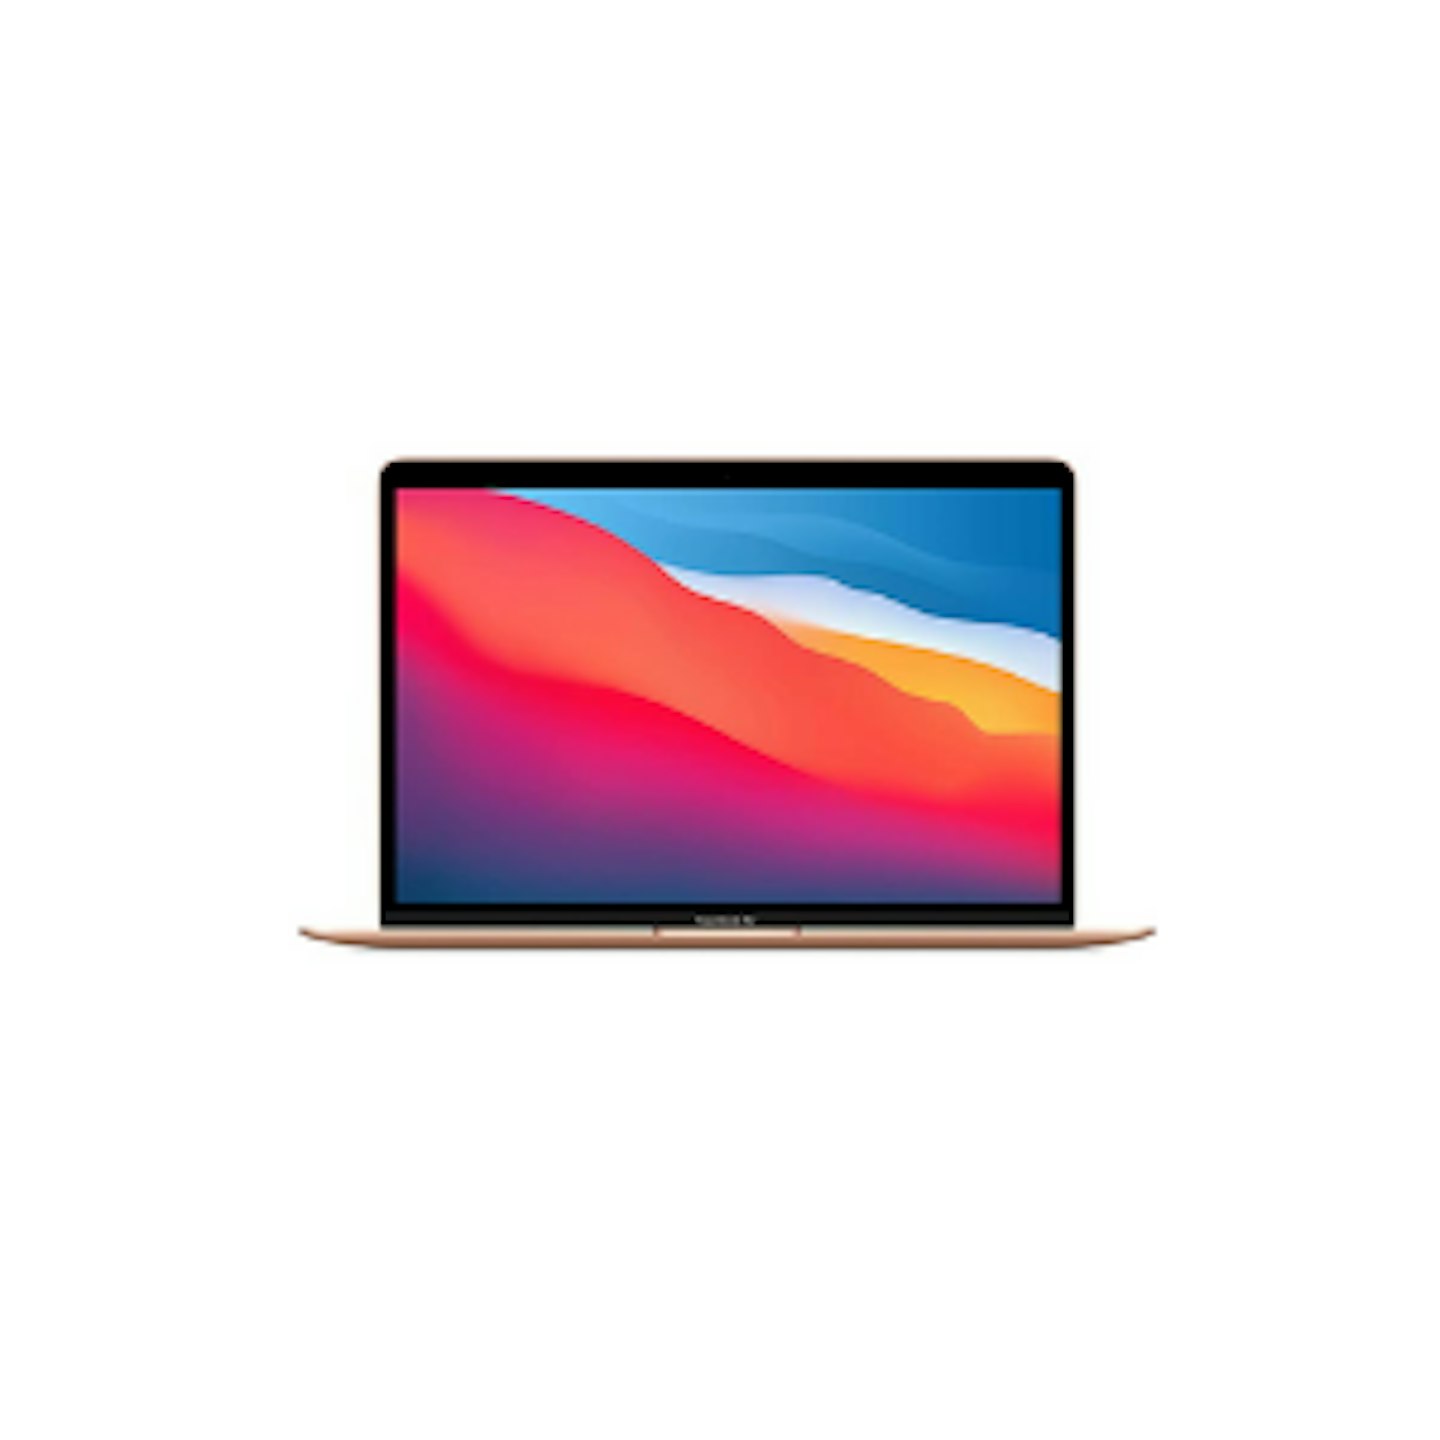 2020 Apple MacBook Air with M1